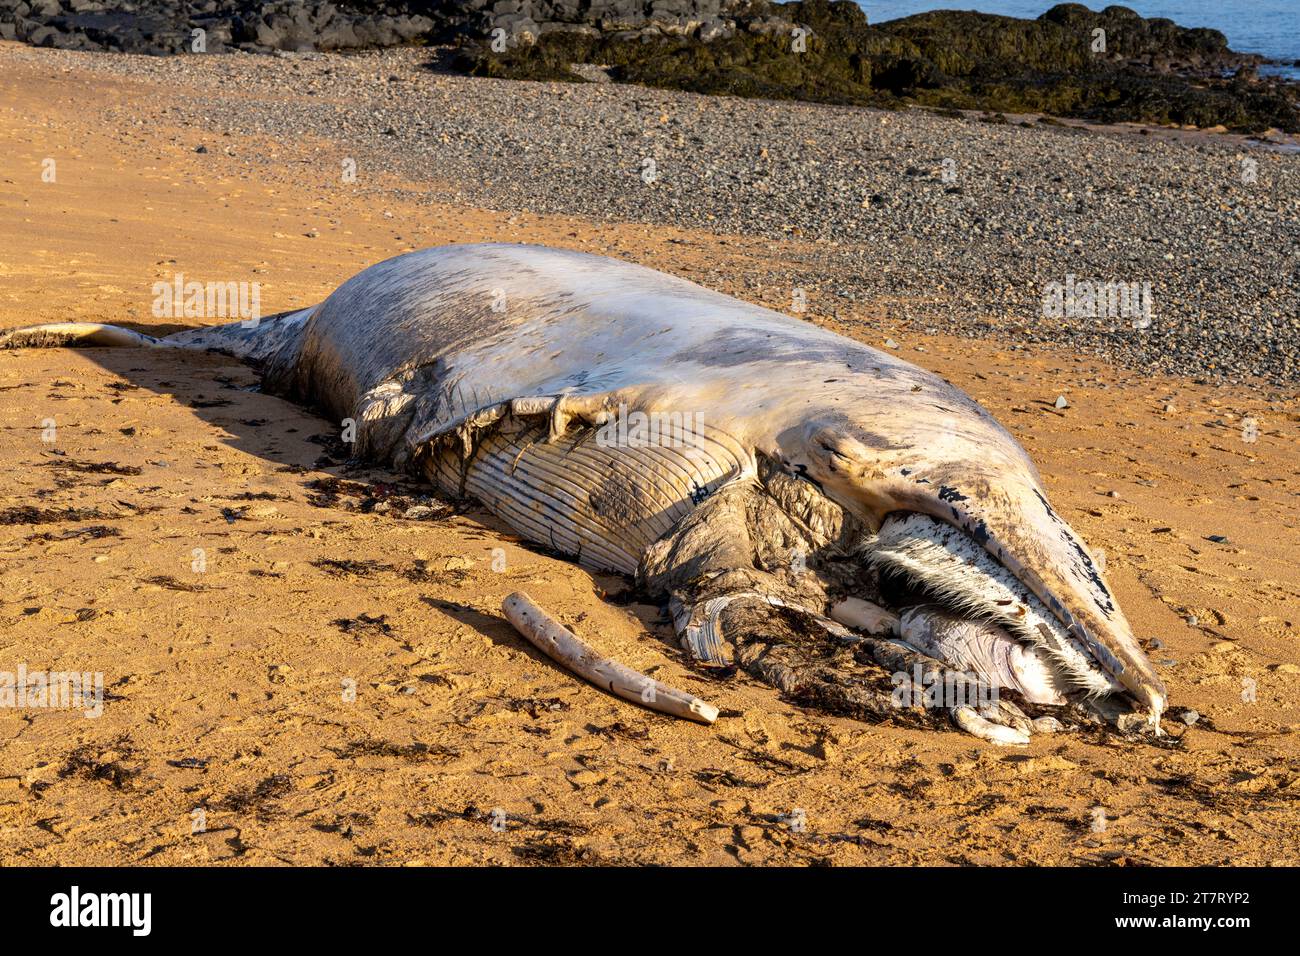 Photos: Mass Pilot Whale Death in Snæfellsnes, West Iceland